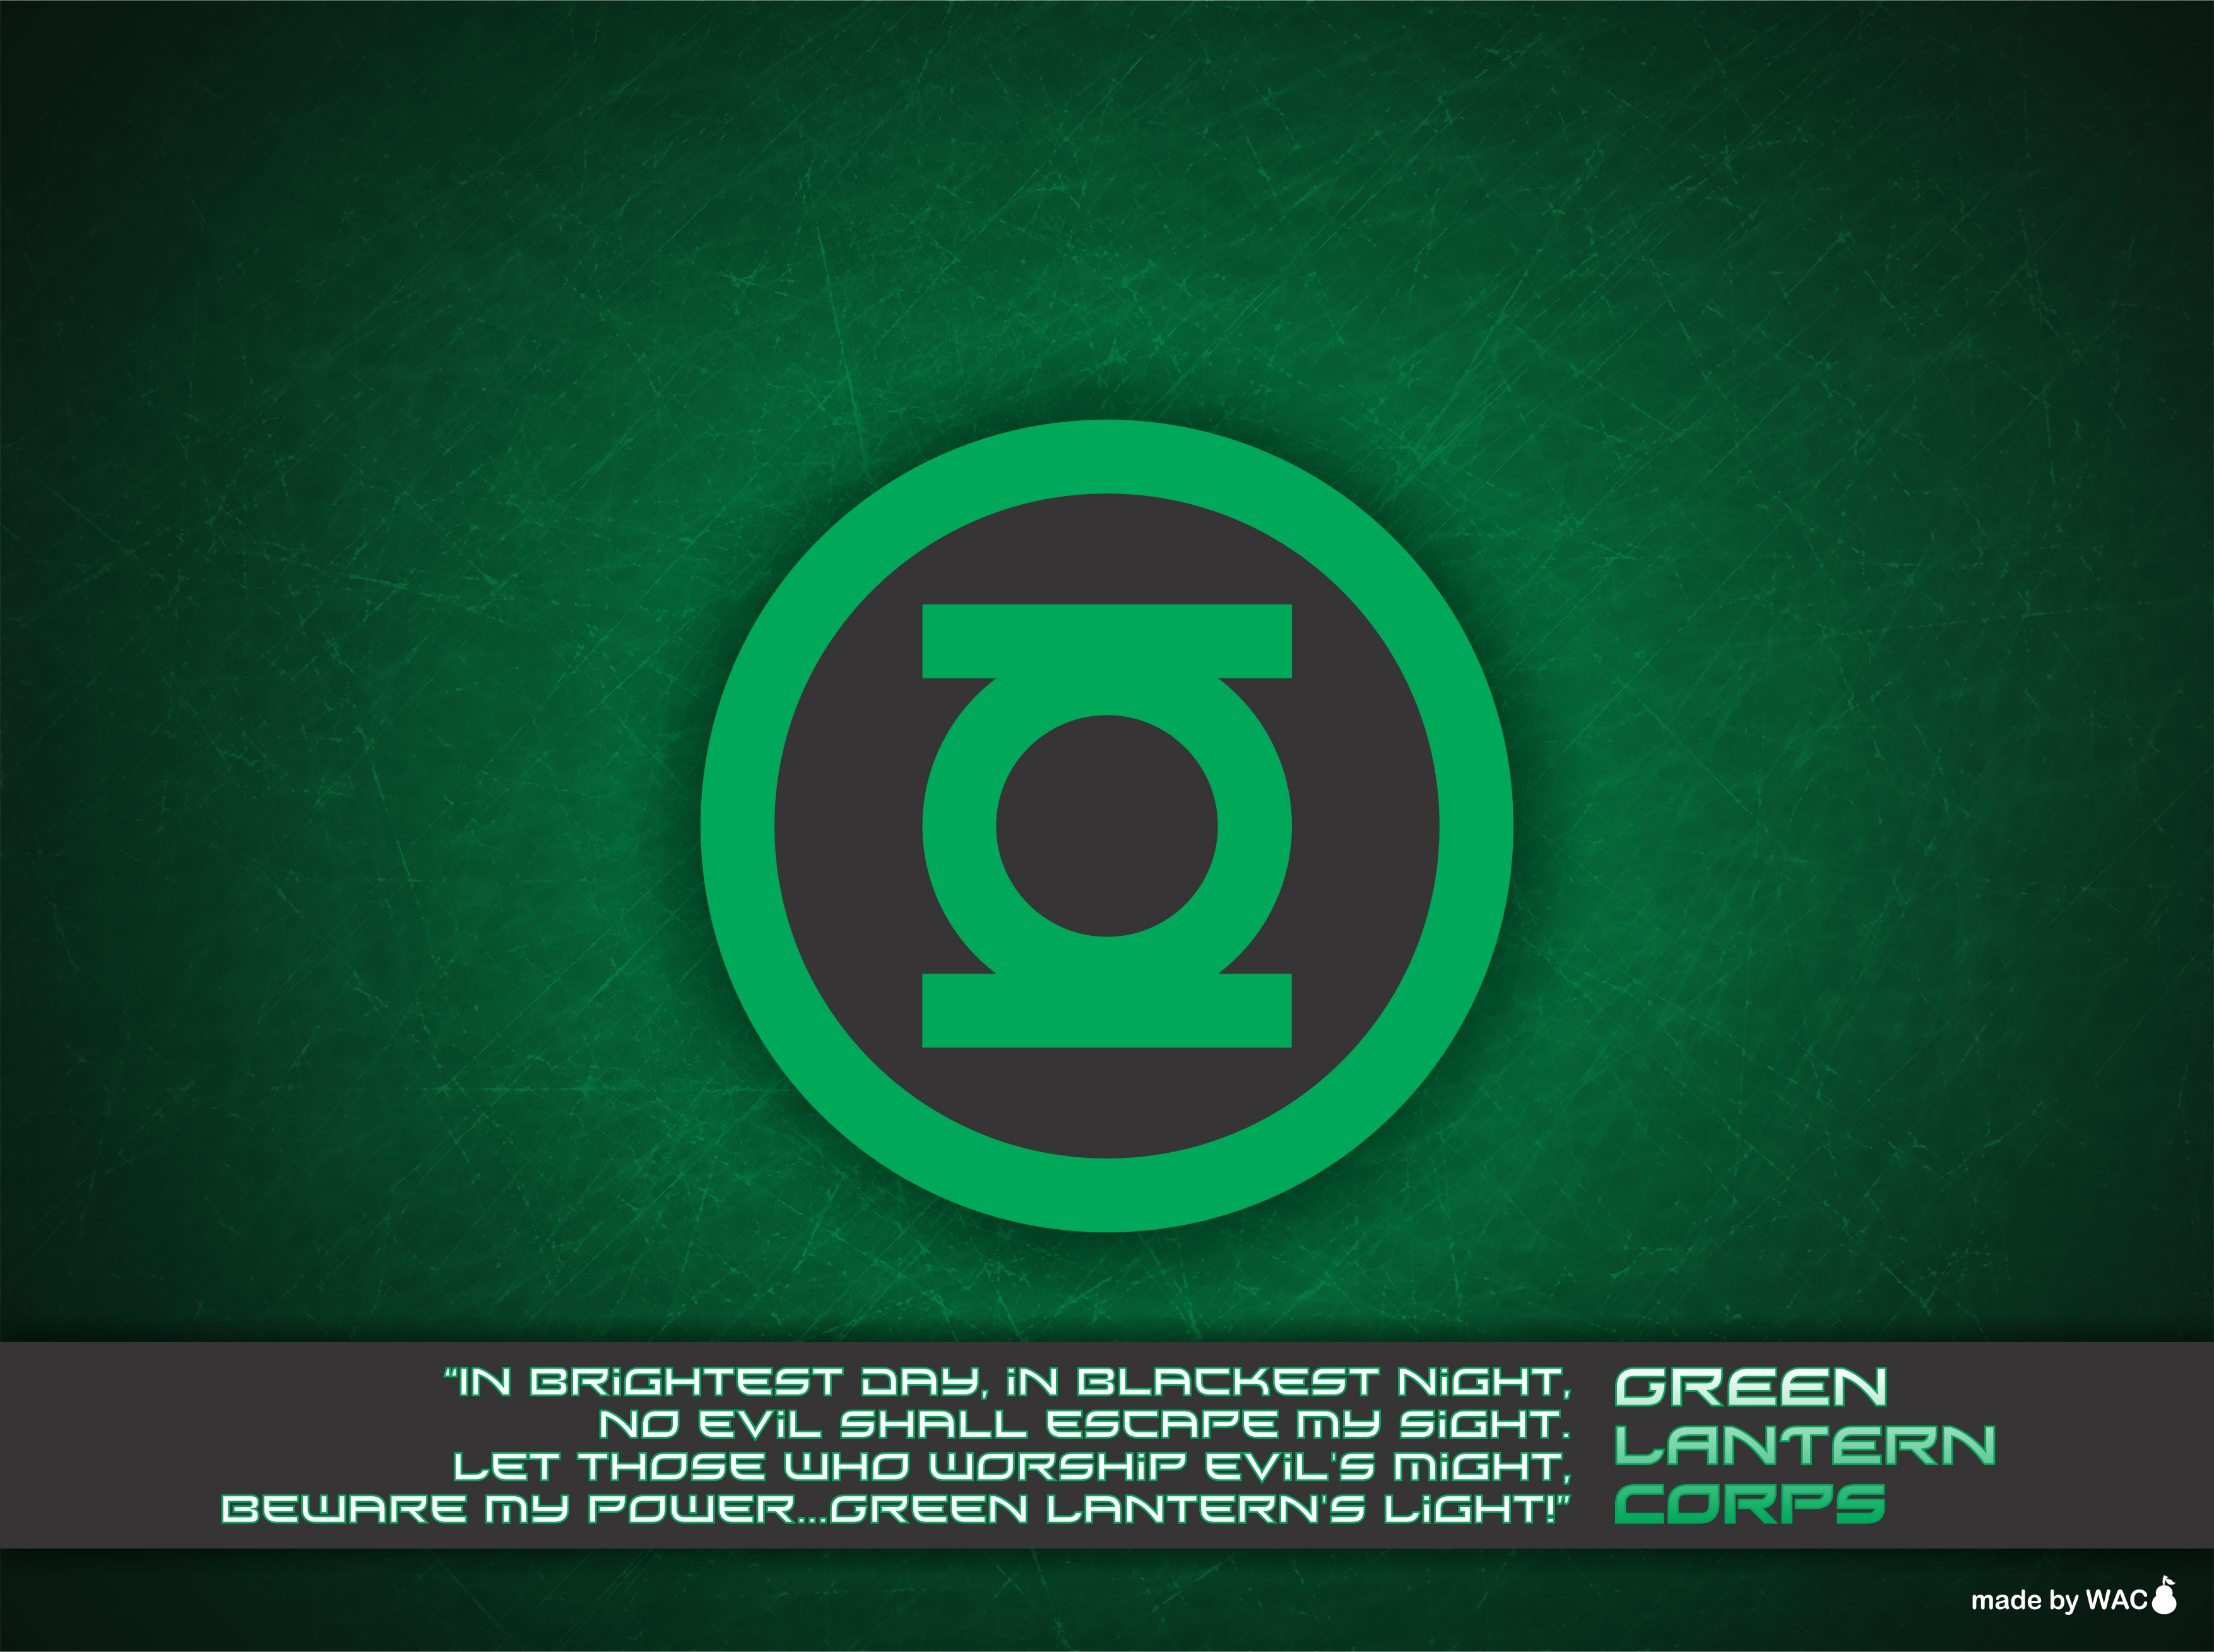 Green Lantern Corps Oath Wallpaper Green lantern corps wallpaper